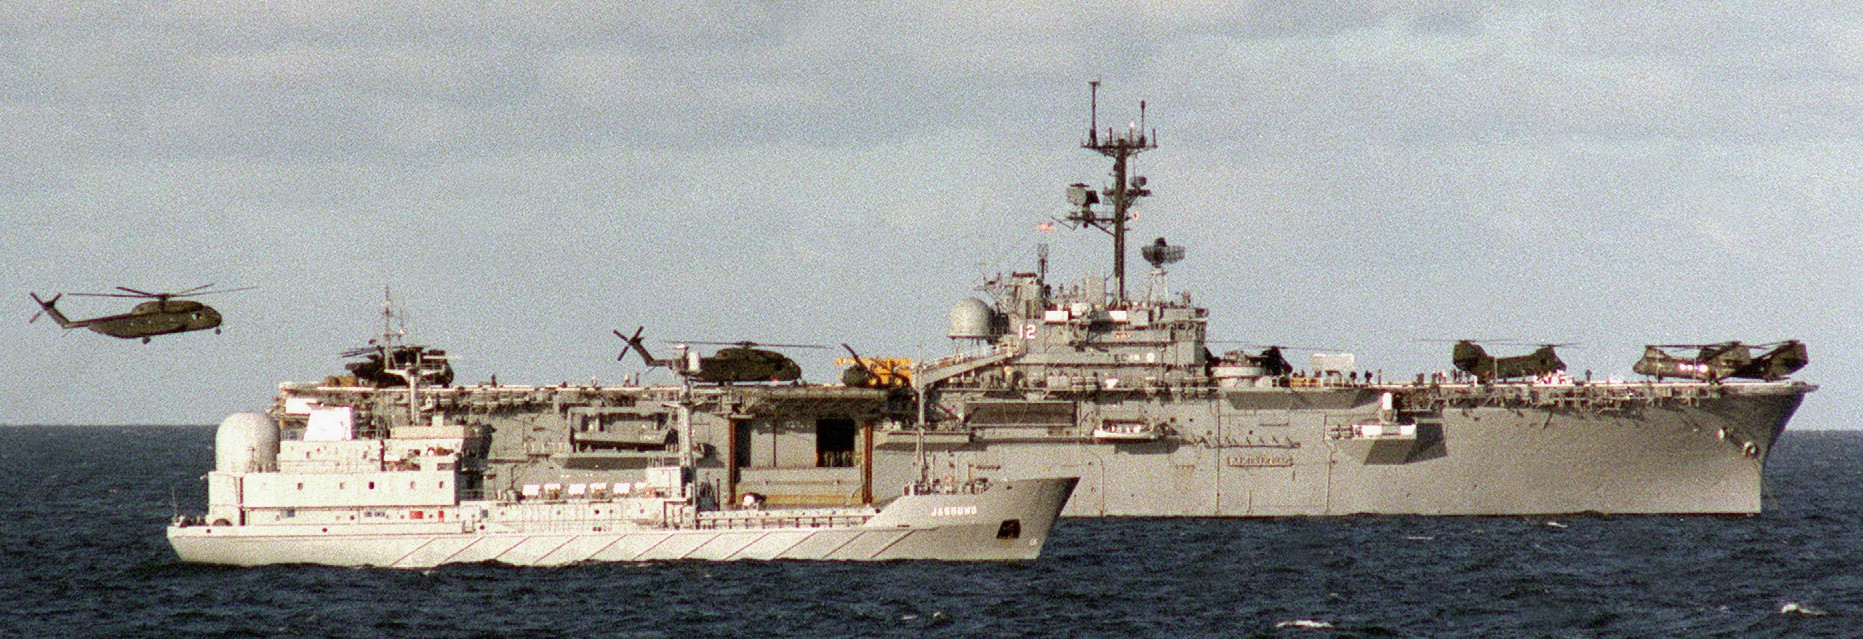 lph-12 uss inchon iwo jima class amphibious assault ship landing platform helicopter us navy 13